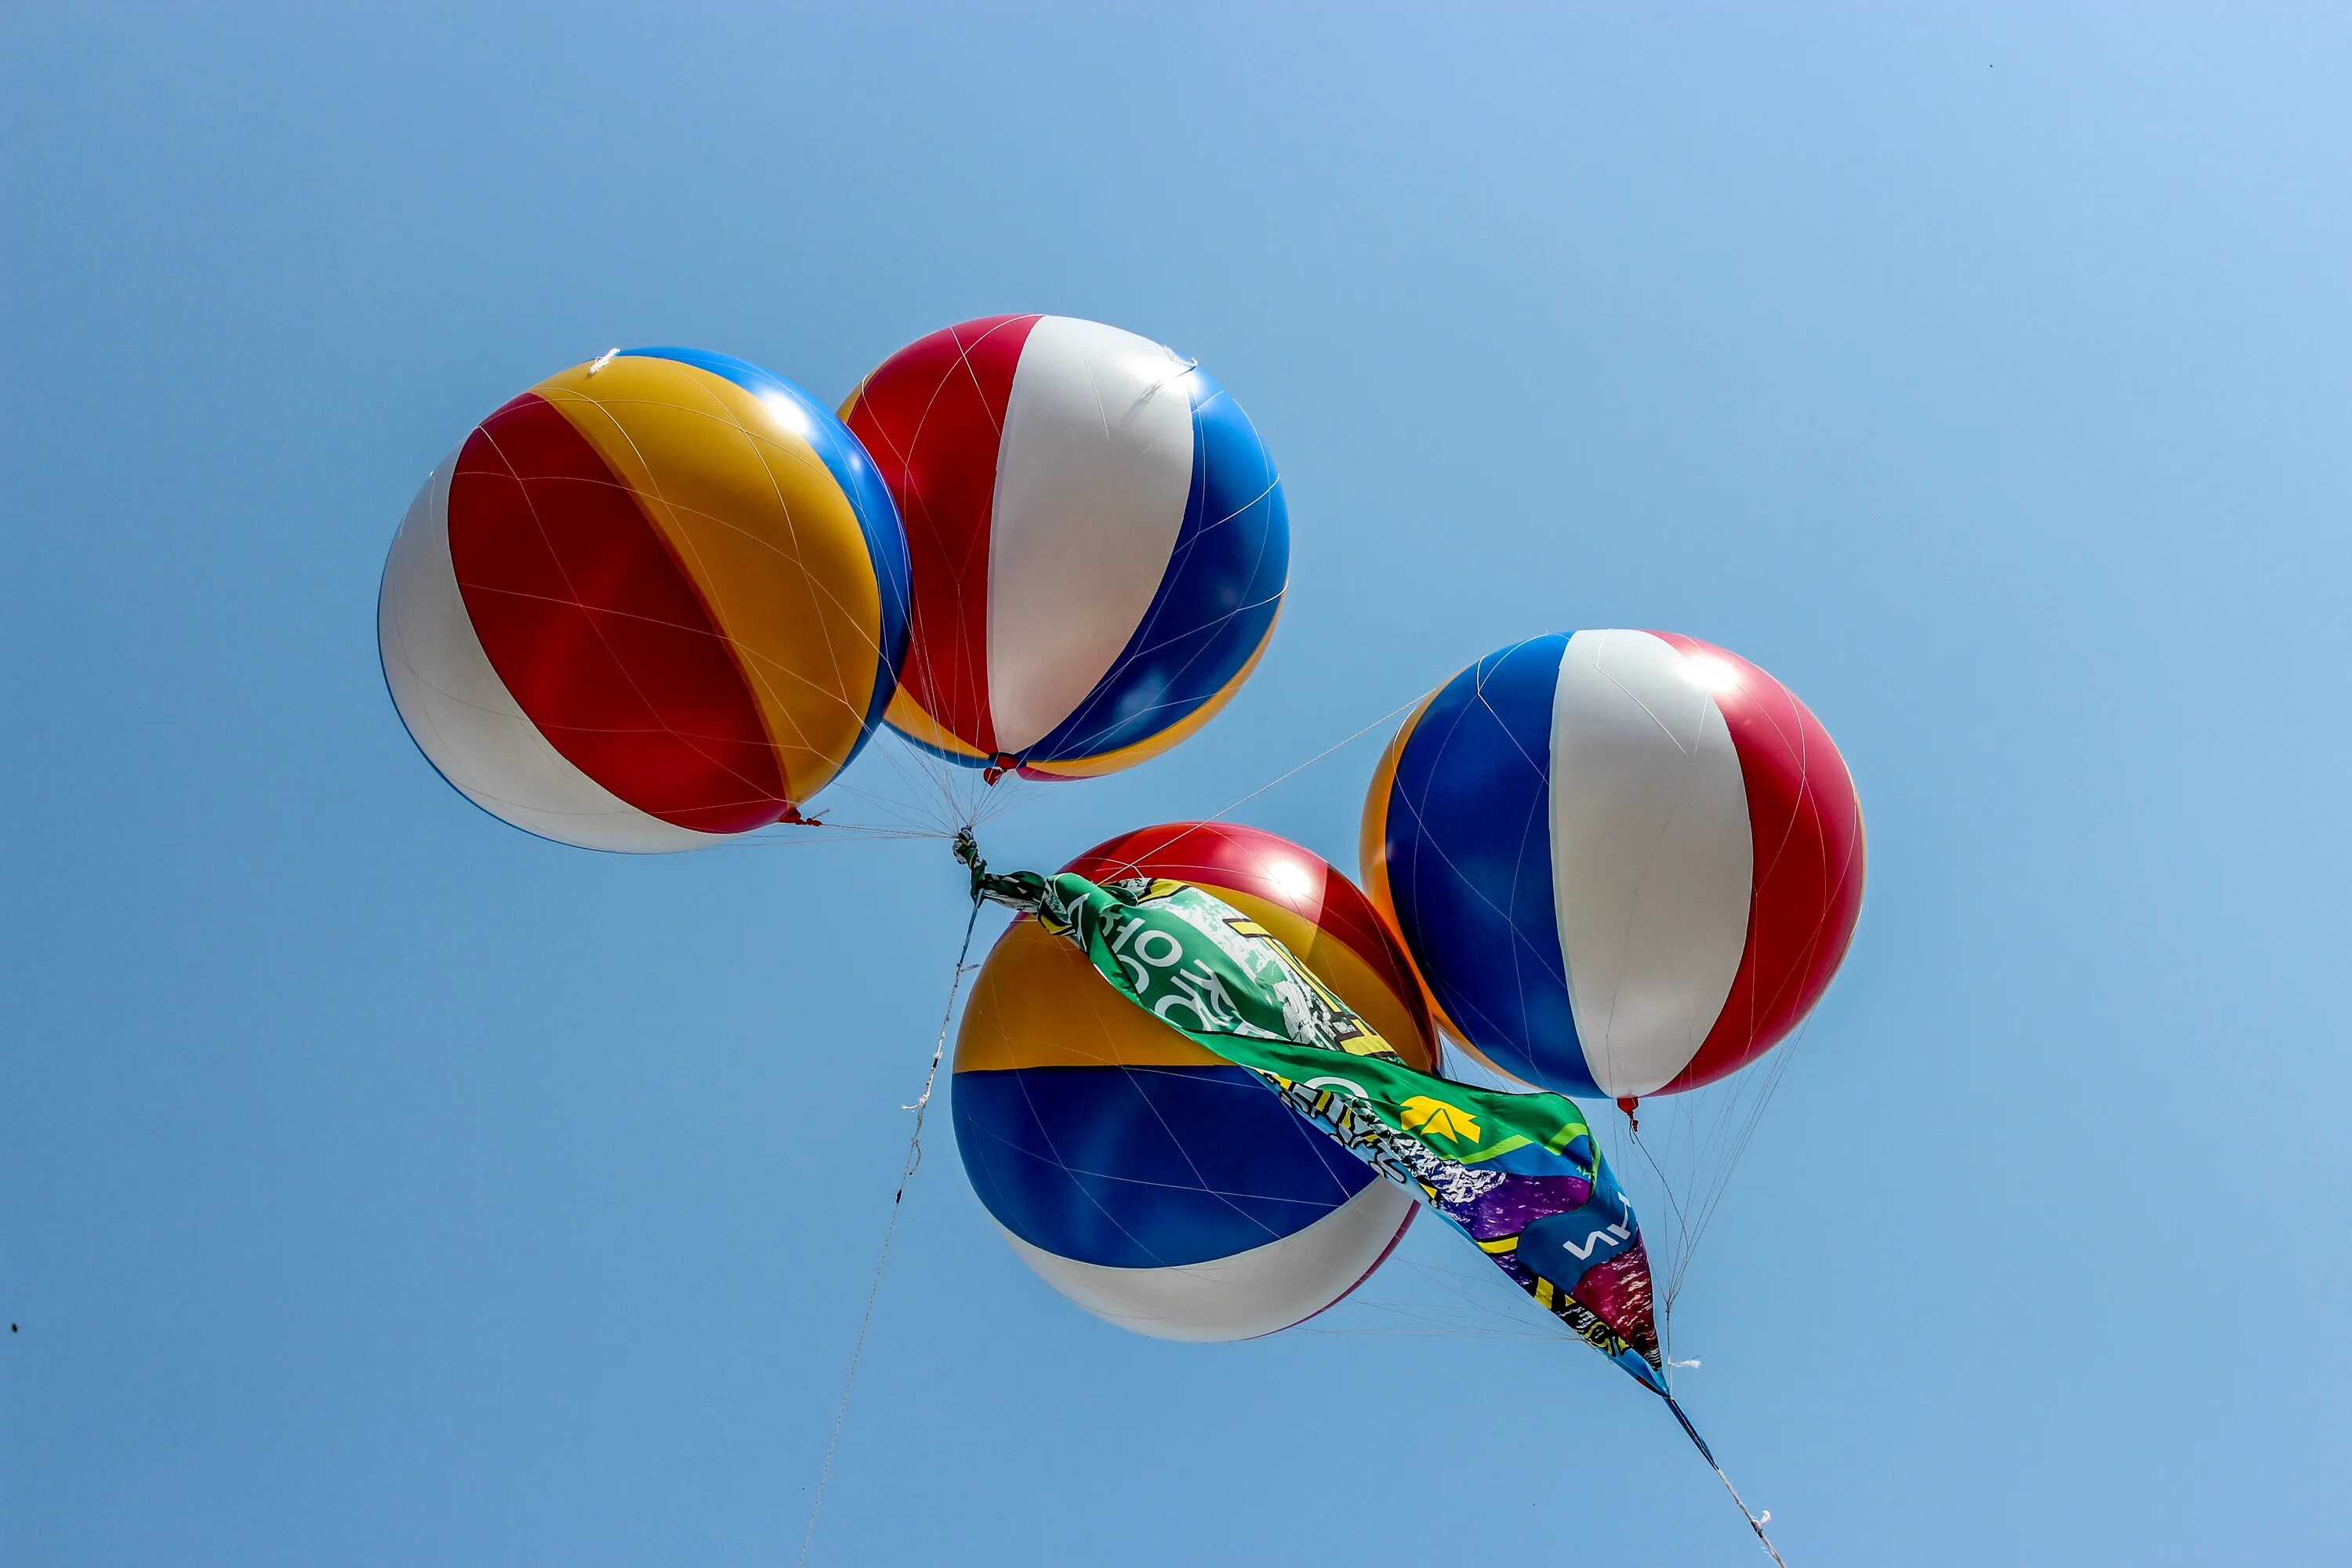 Flying balloon. Воздушные шары. Воздушный шар ветер. Шары надувные. Шары воздушные в воздухе.